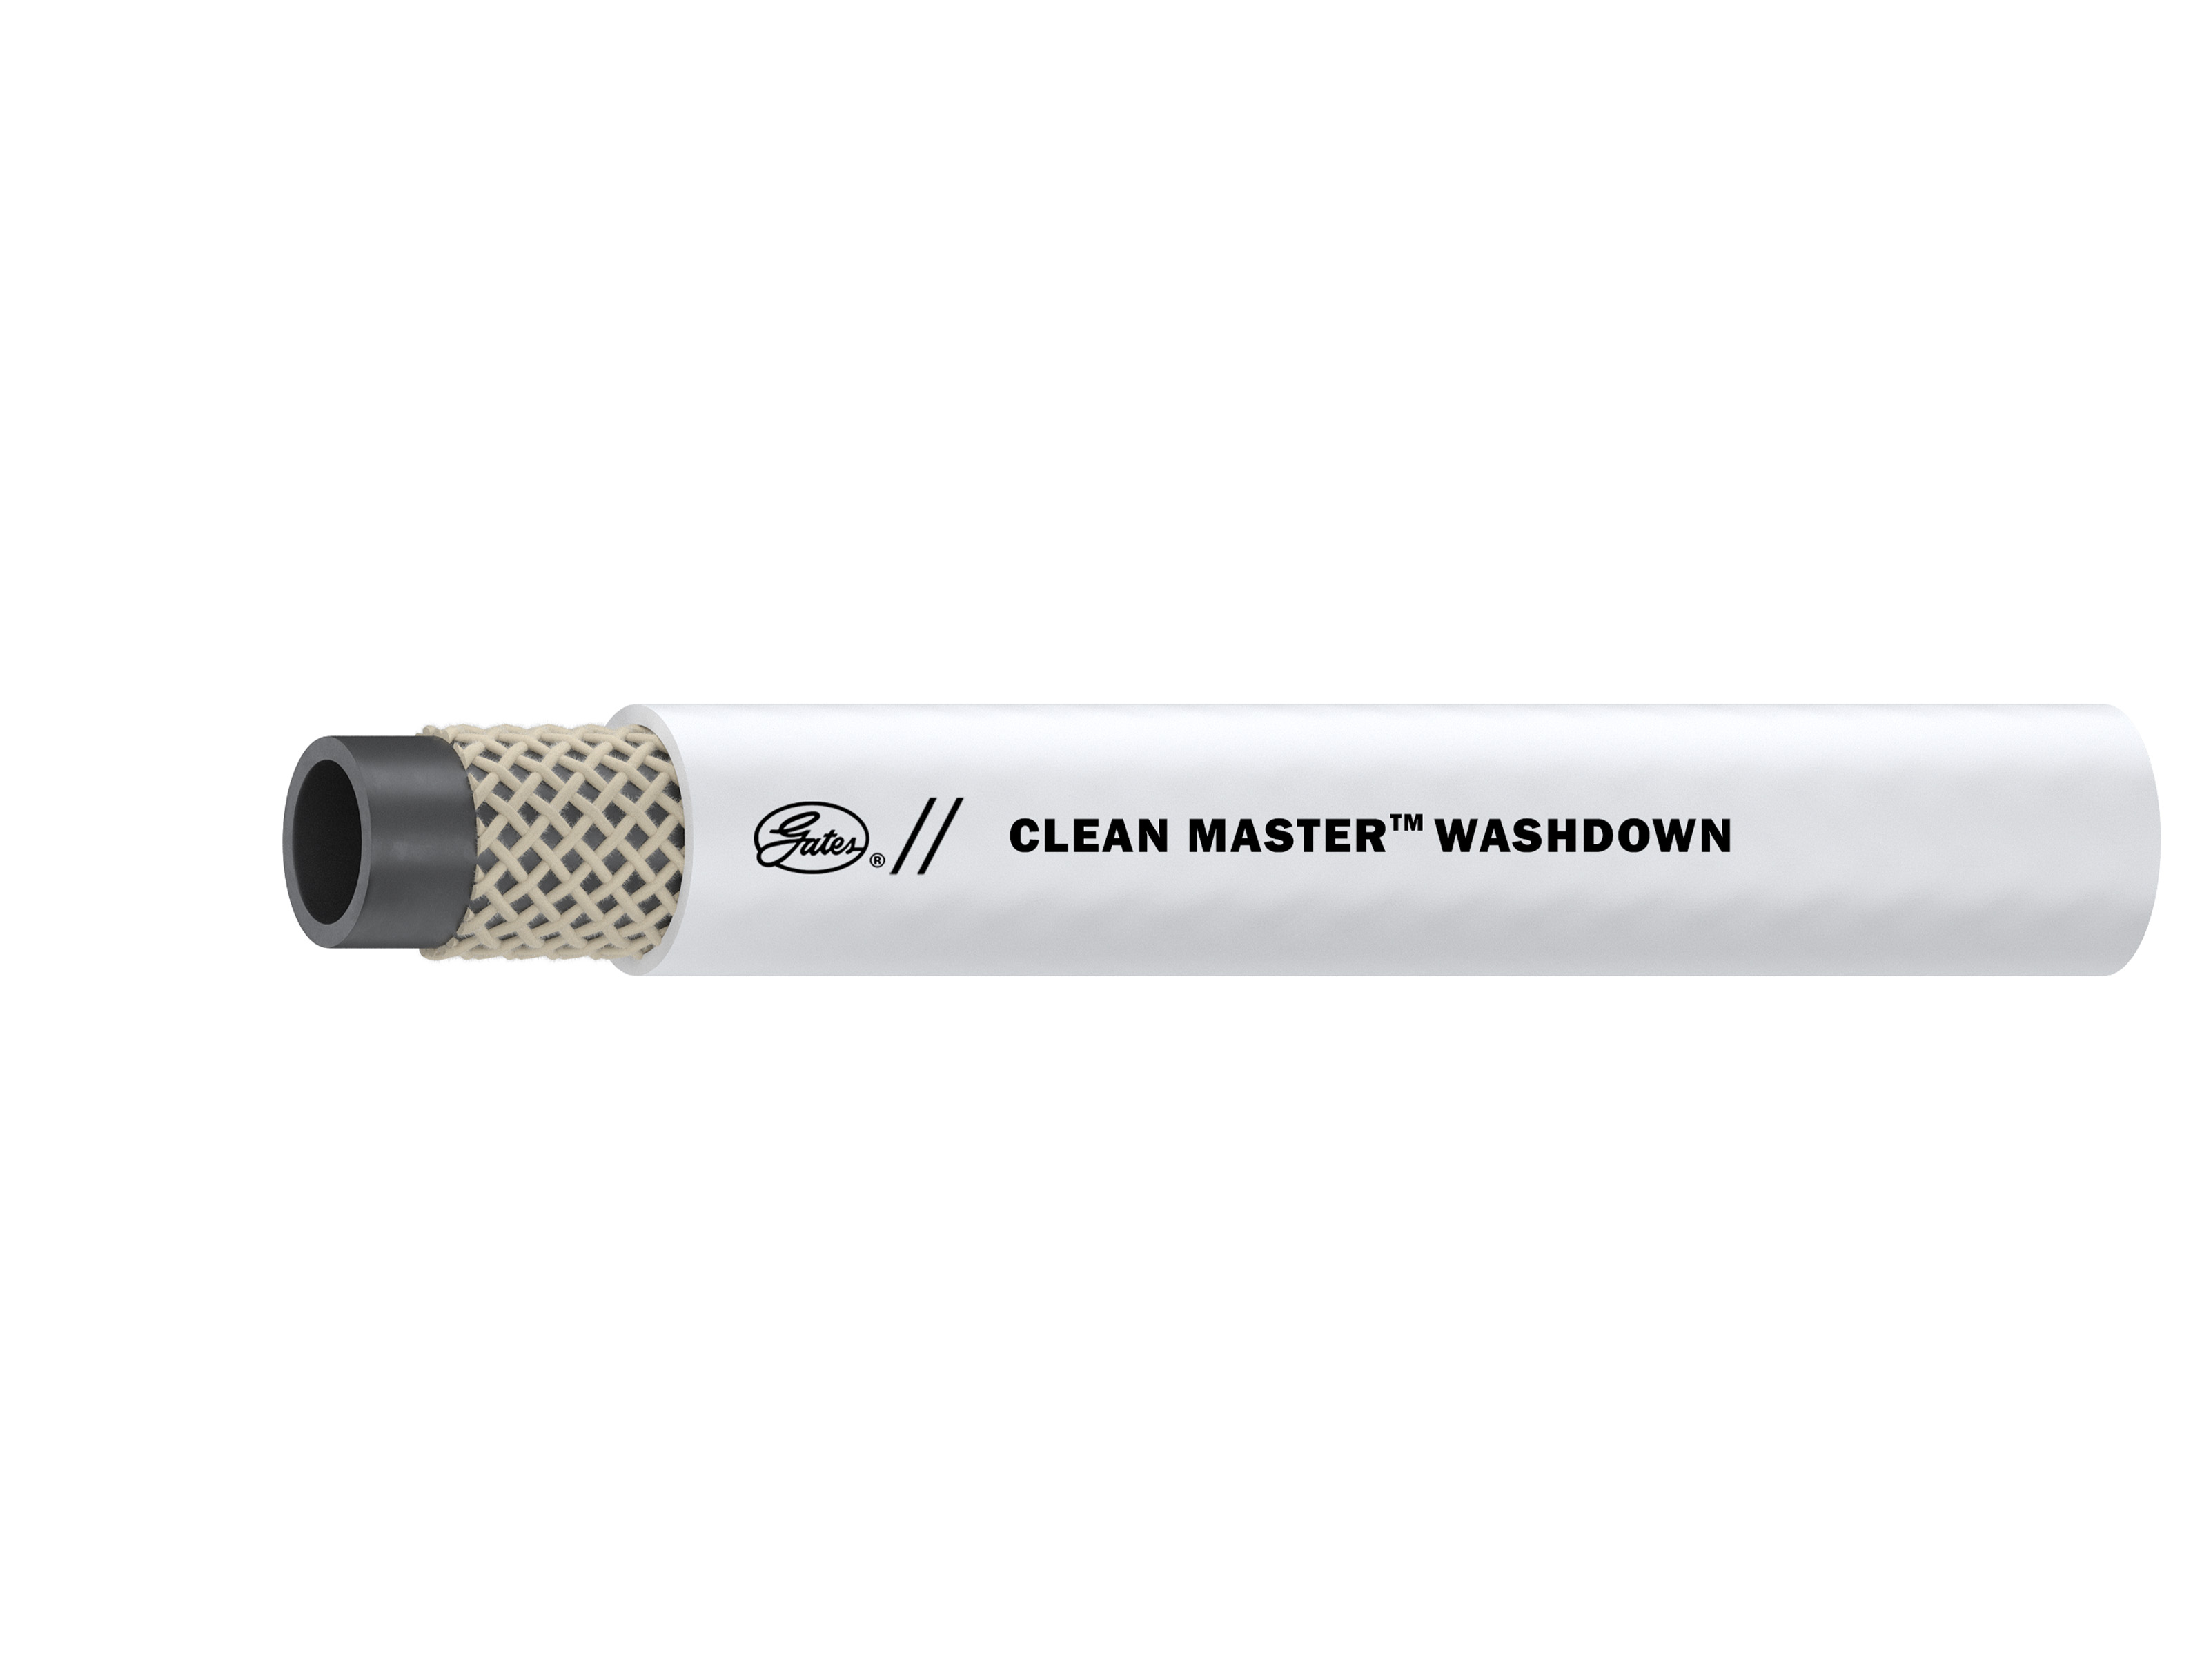 Clean Master Washdown Industrial Hose